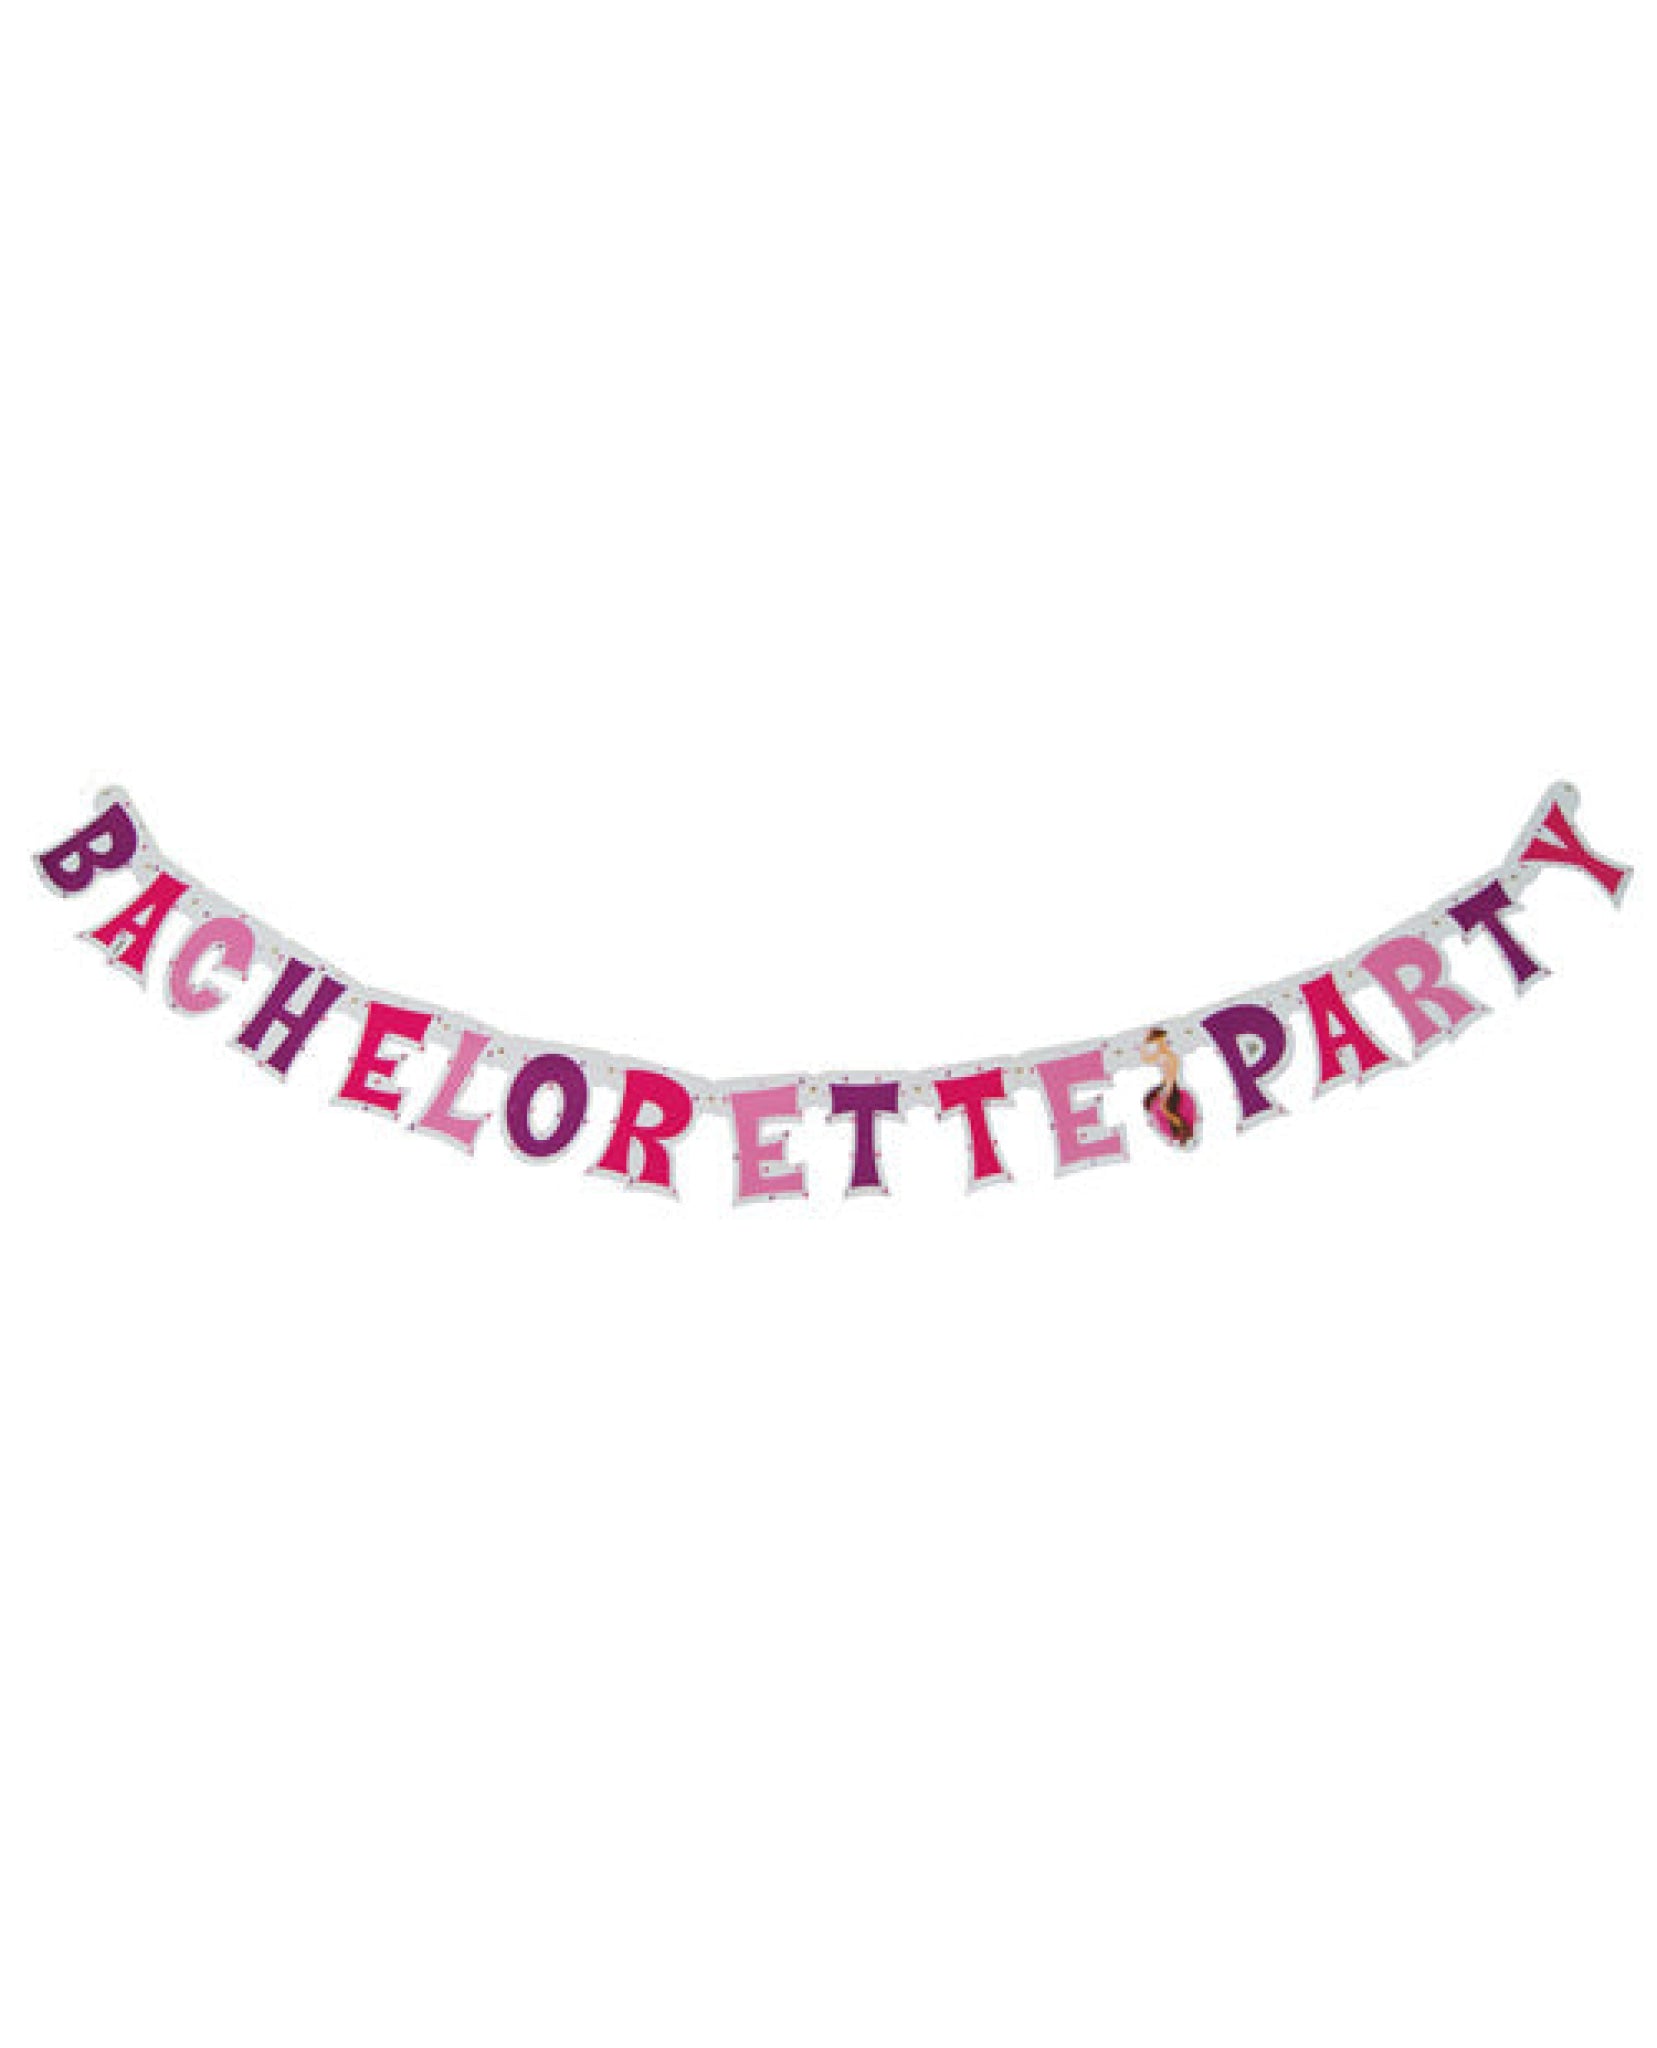 Bachelorette Party Letter Banner Hott Products